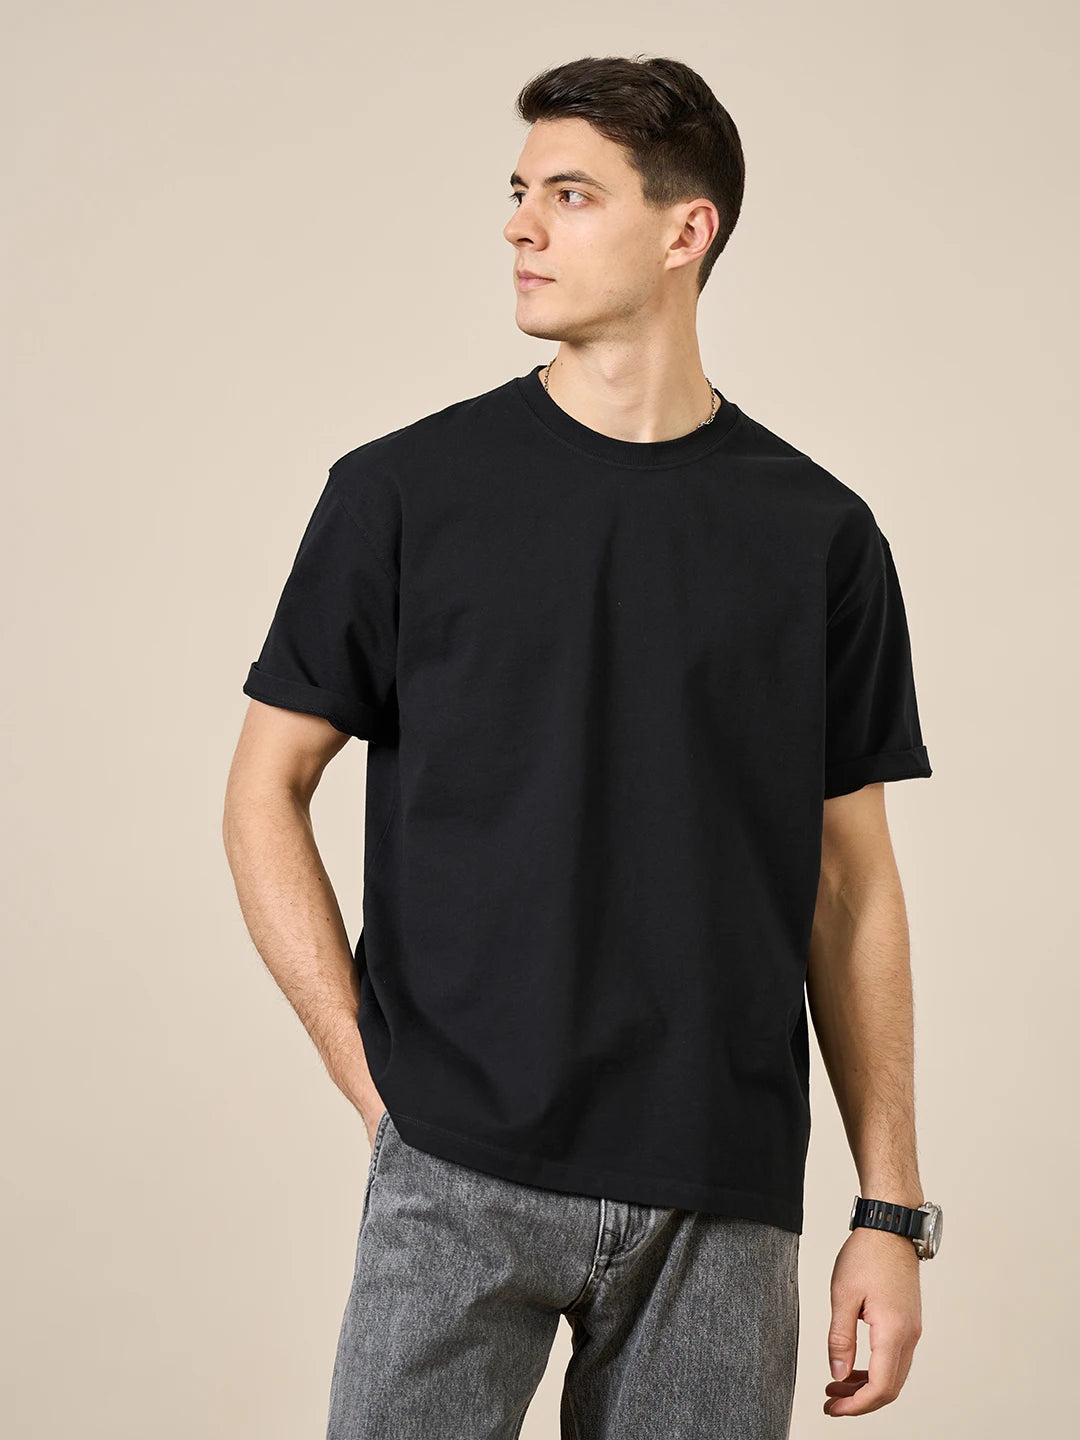 SIMWOOD Men's Black Drop Sleeve 250g T-shirt 100% Cotton